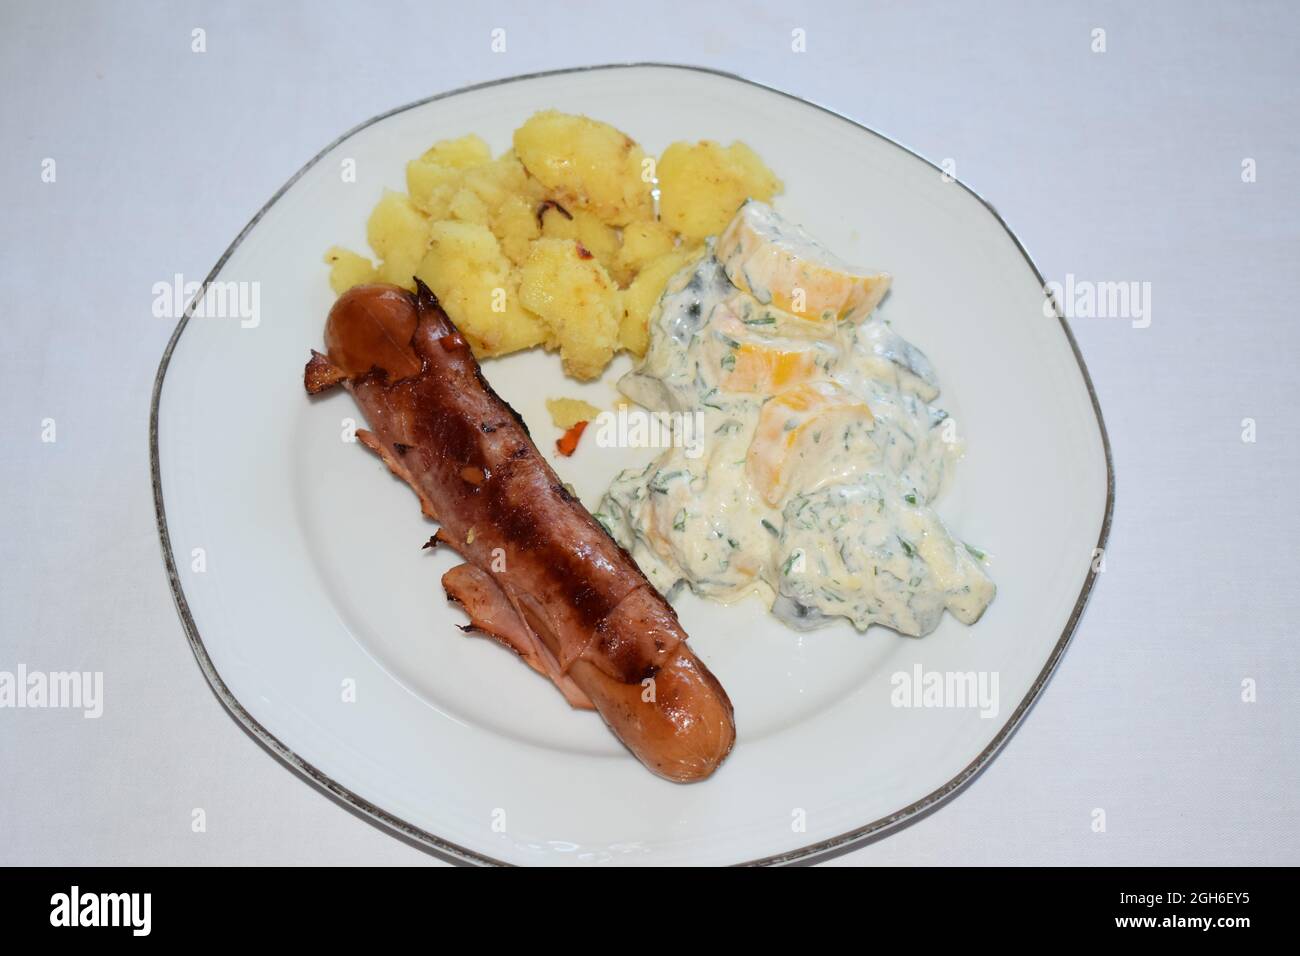 Berner Würstchen with potatoes and zucchini salad Stock Photo